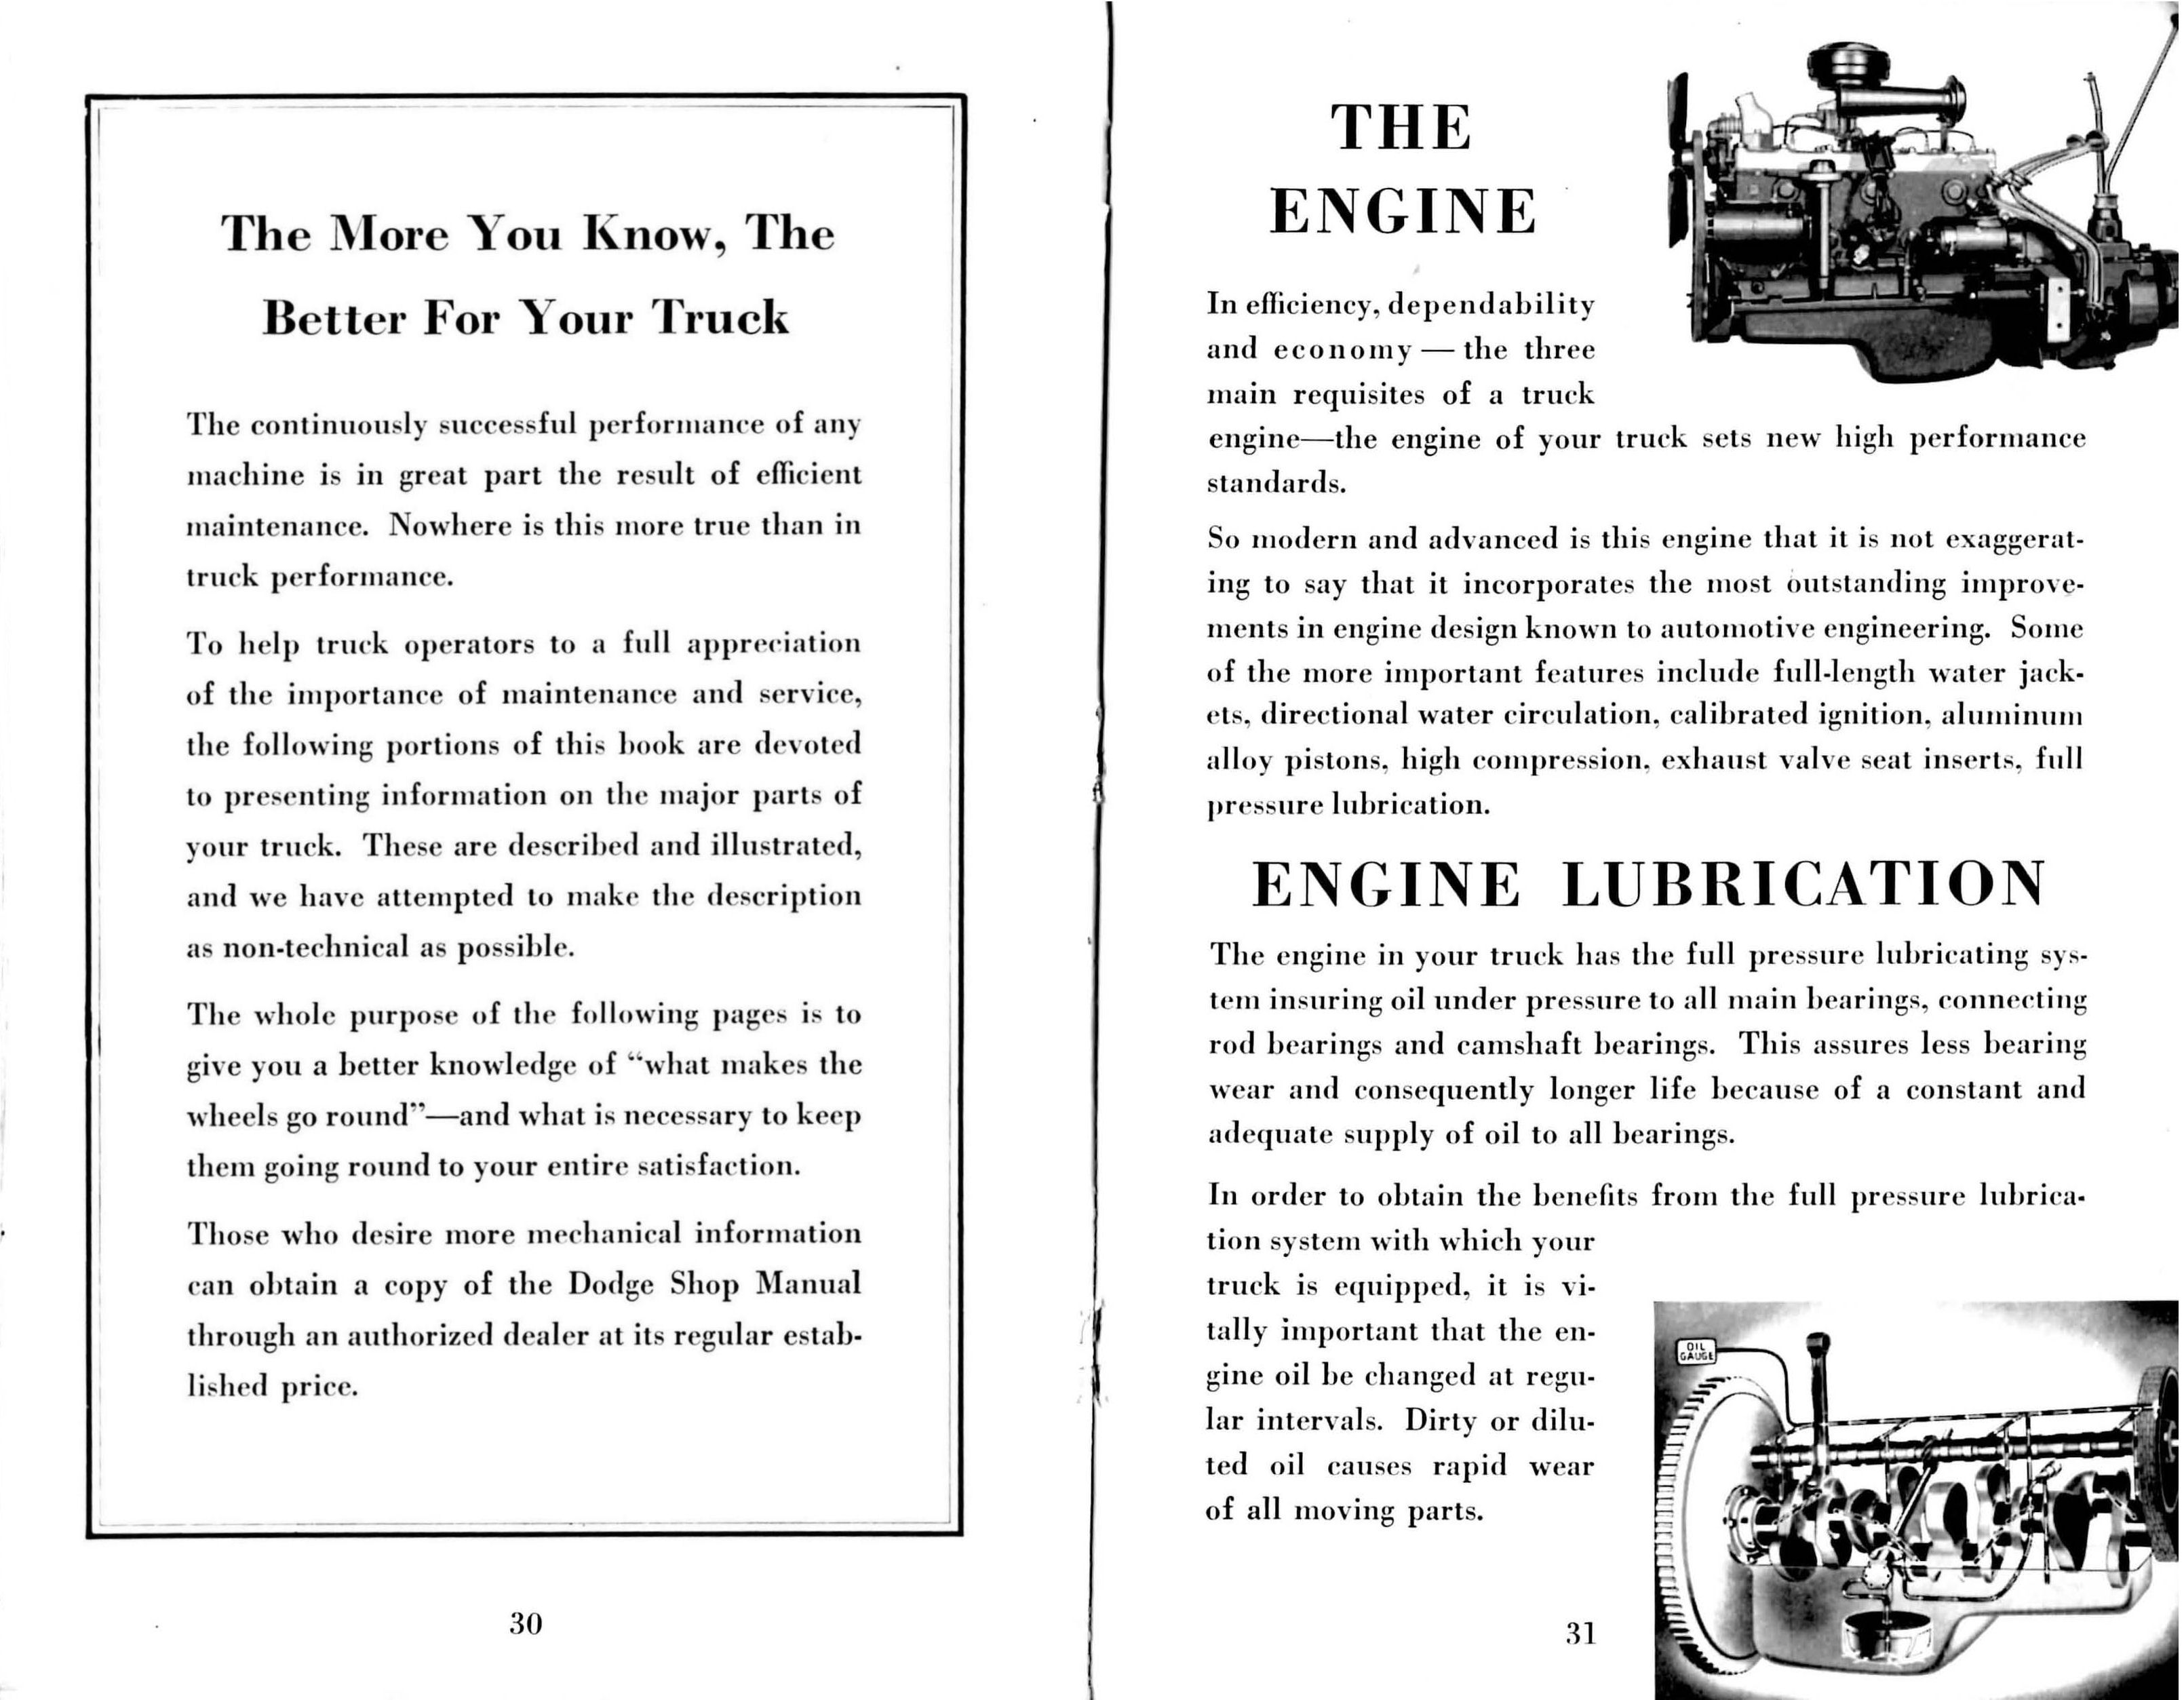 1937_Dodge_Truck_Manual-30-31